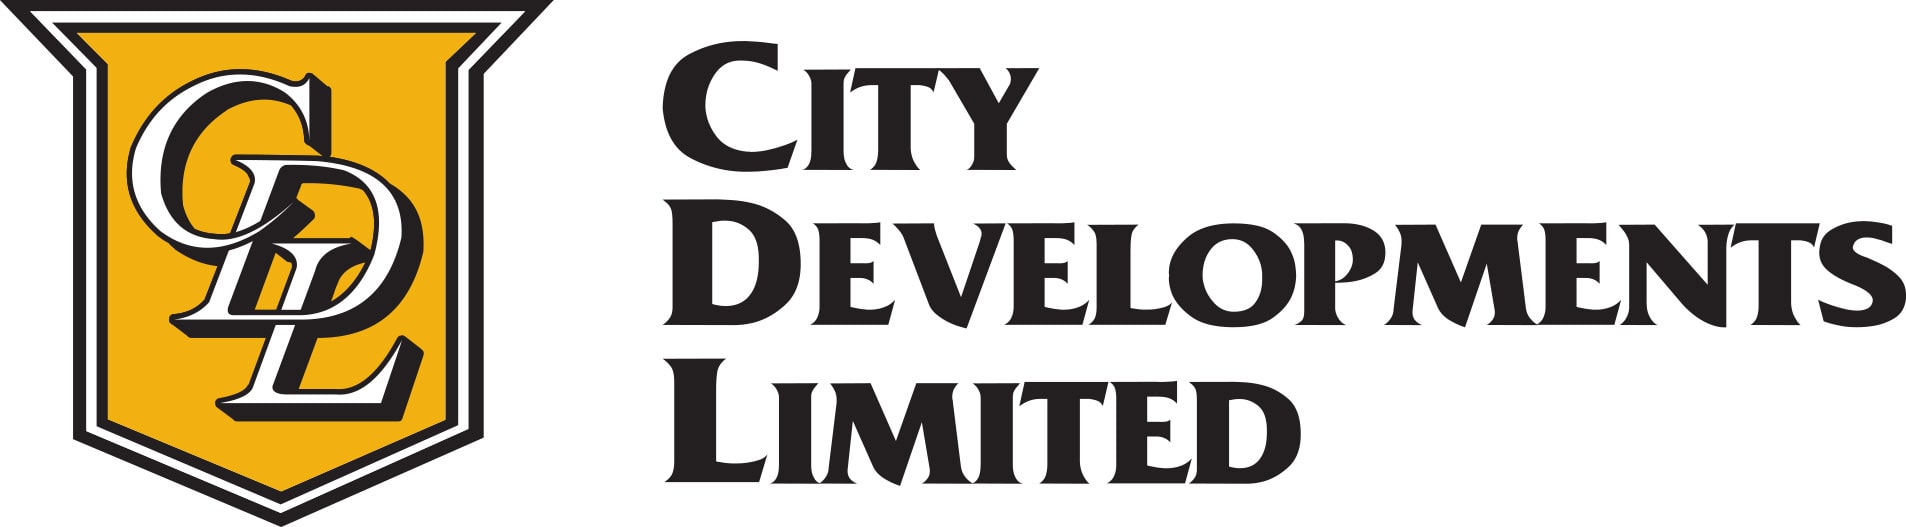 city development limited logo